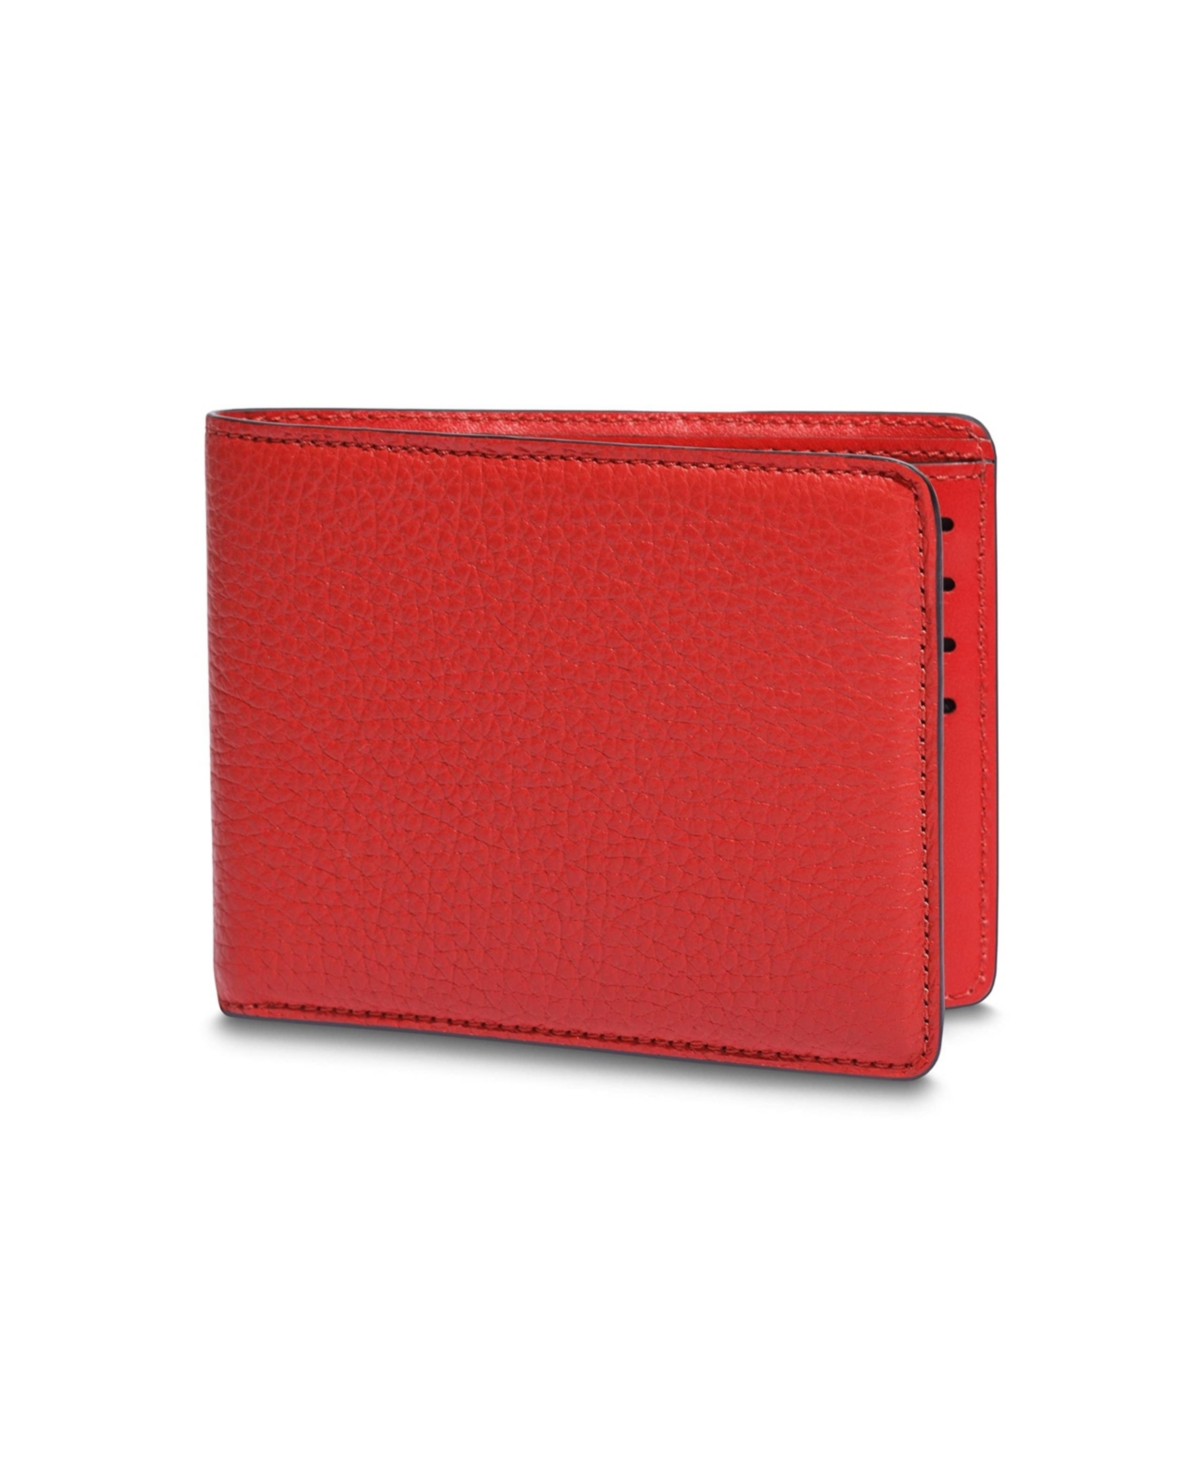 Italia Slim 8-Slot Men's Pocket Wallet Made In Italy, Monfrini Collection - Red